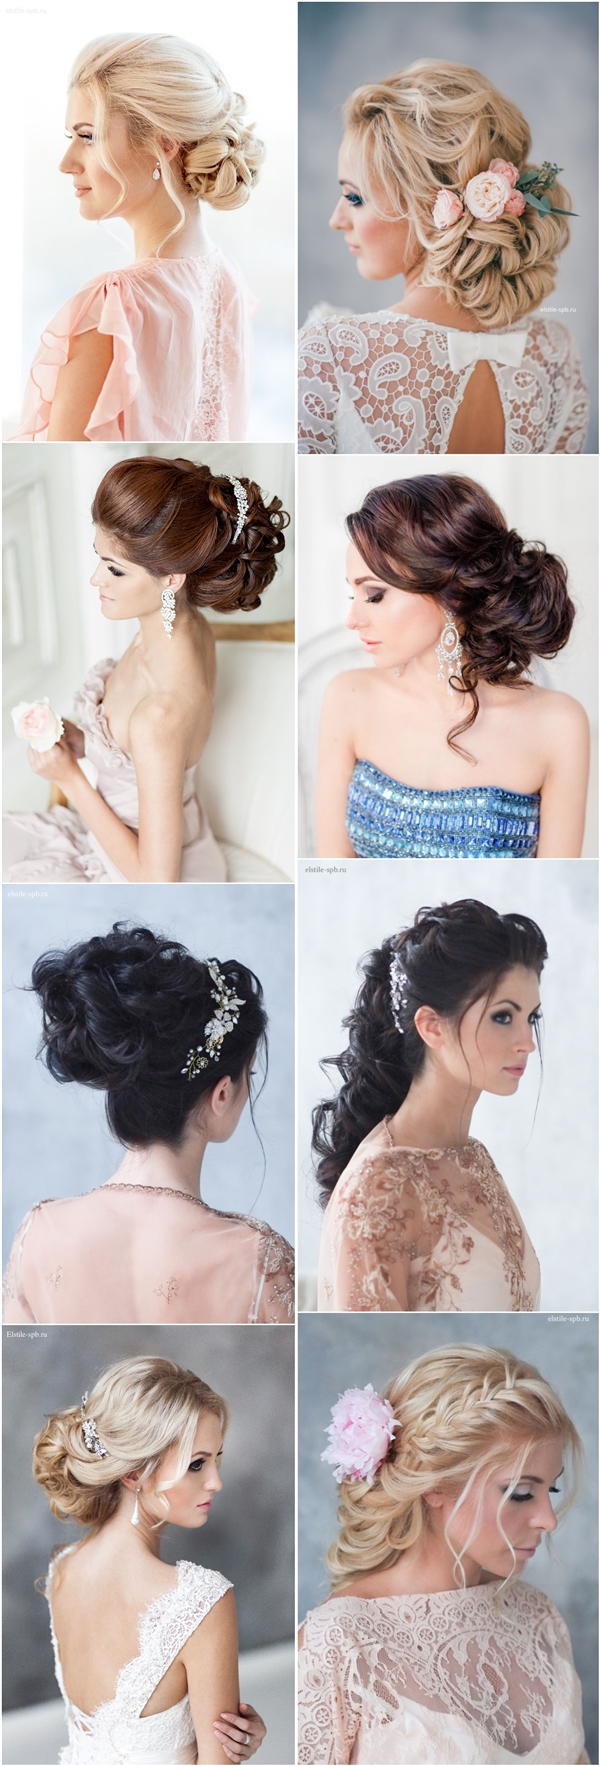 braided wedding bridal hairstyles for long hair